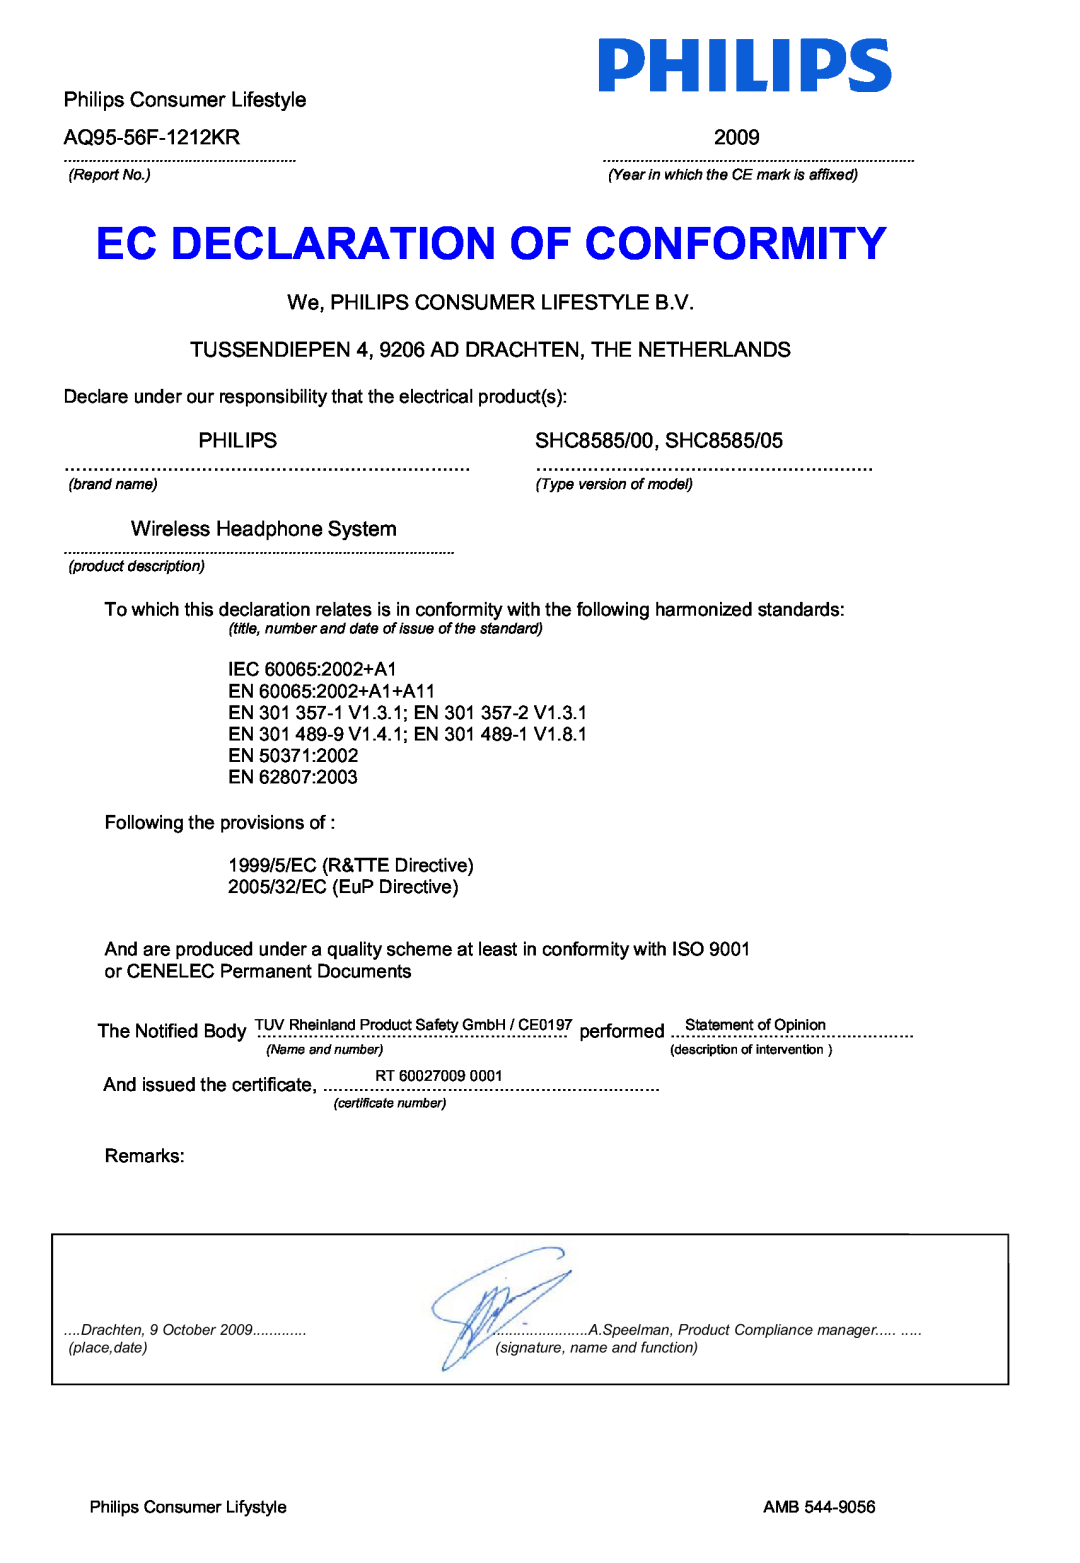 Philips manual Ec Declaration Of Conformity, Philips Consumer Lifestyle, AQ95-56F-1212KR, 2009, SHC8585/00, SHC8585/05 